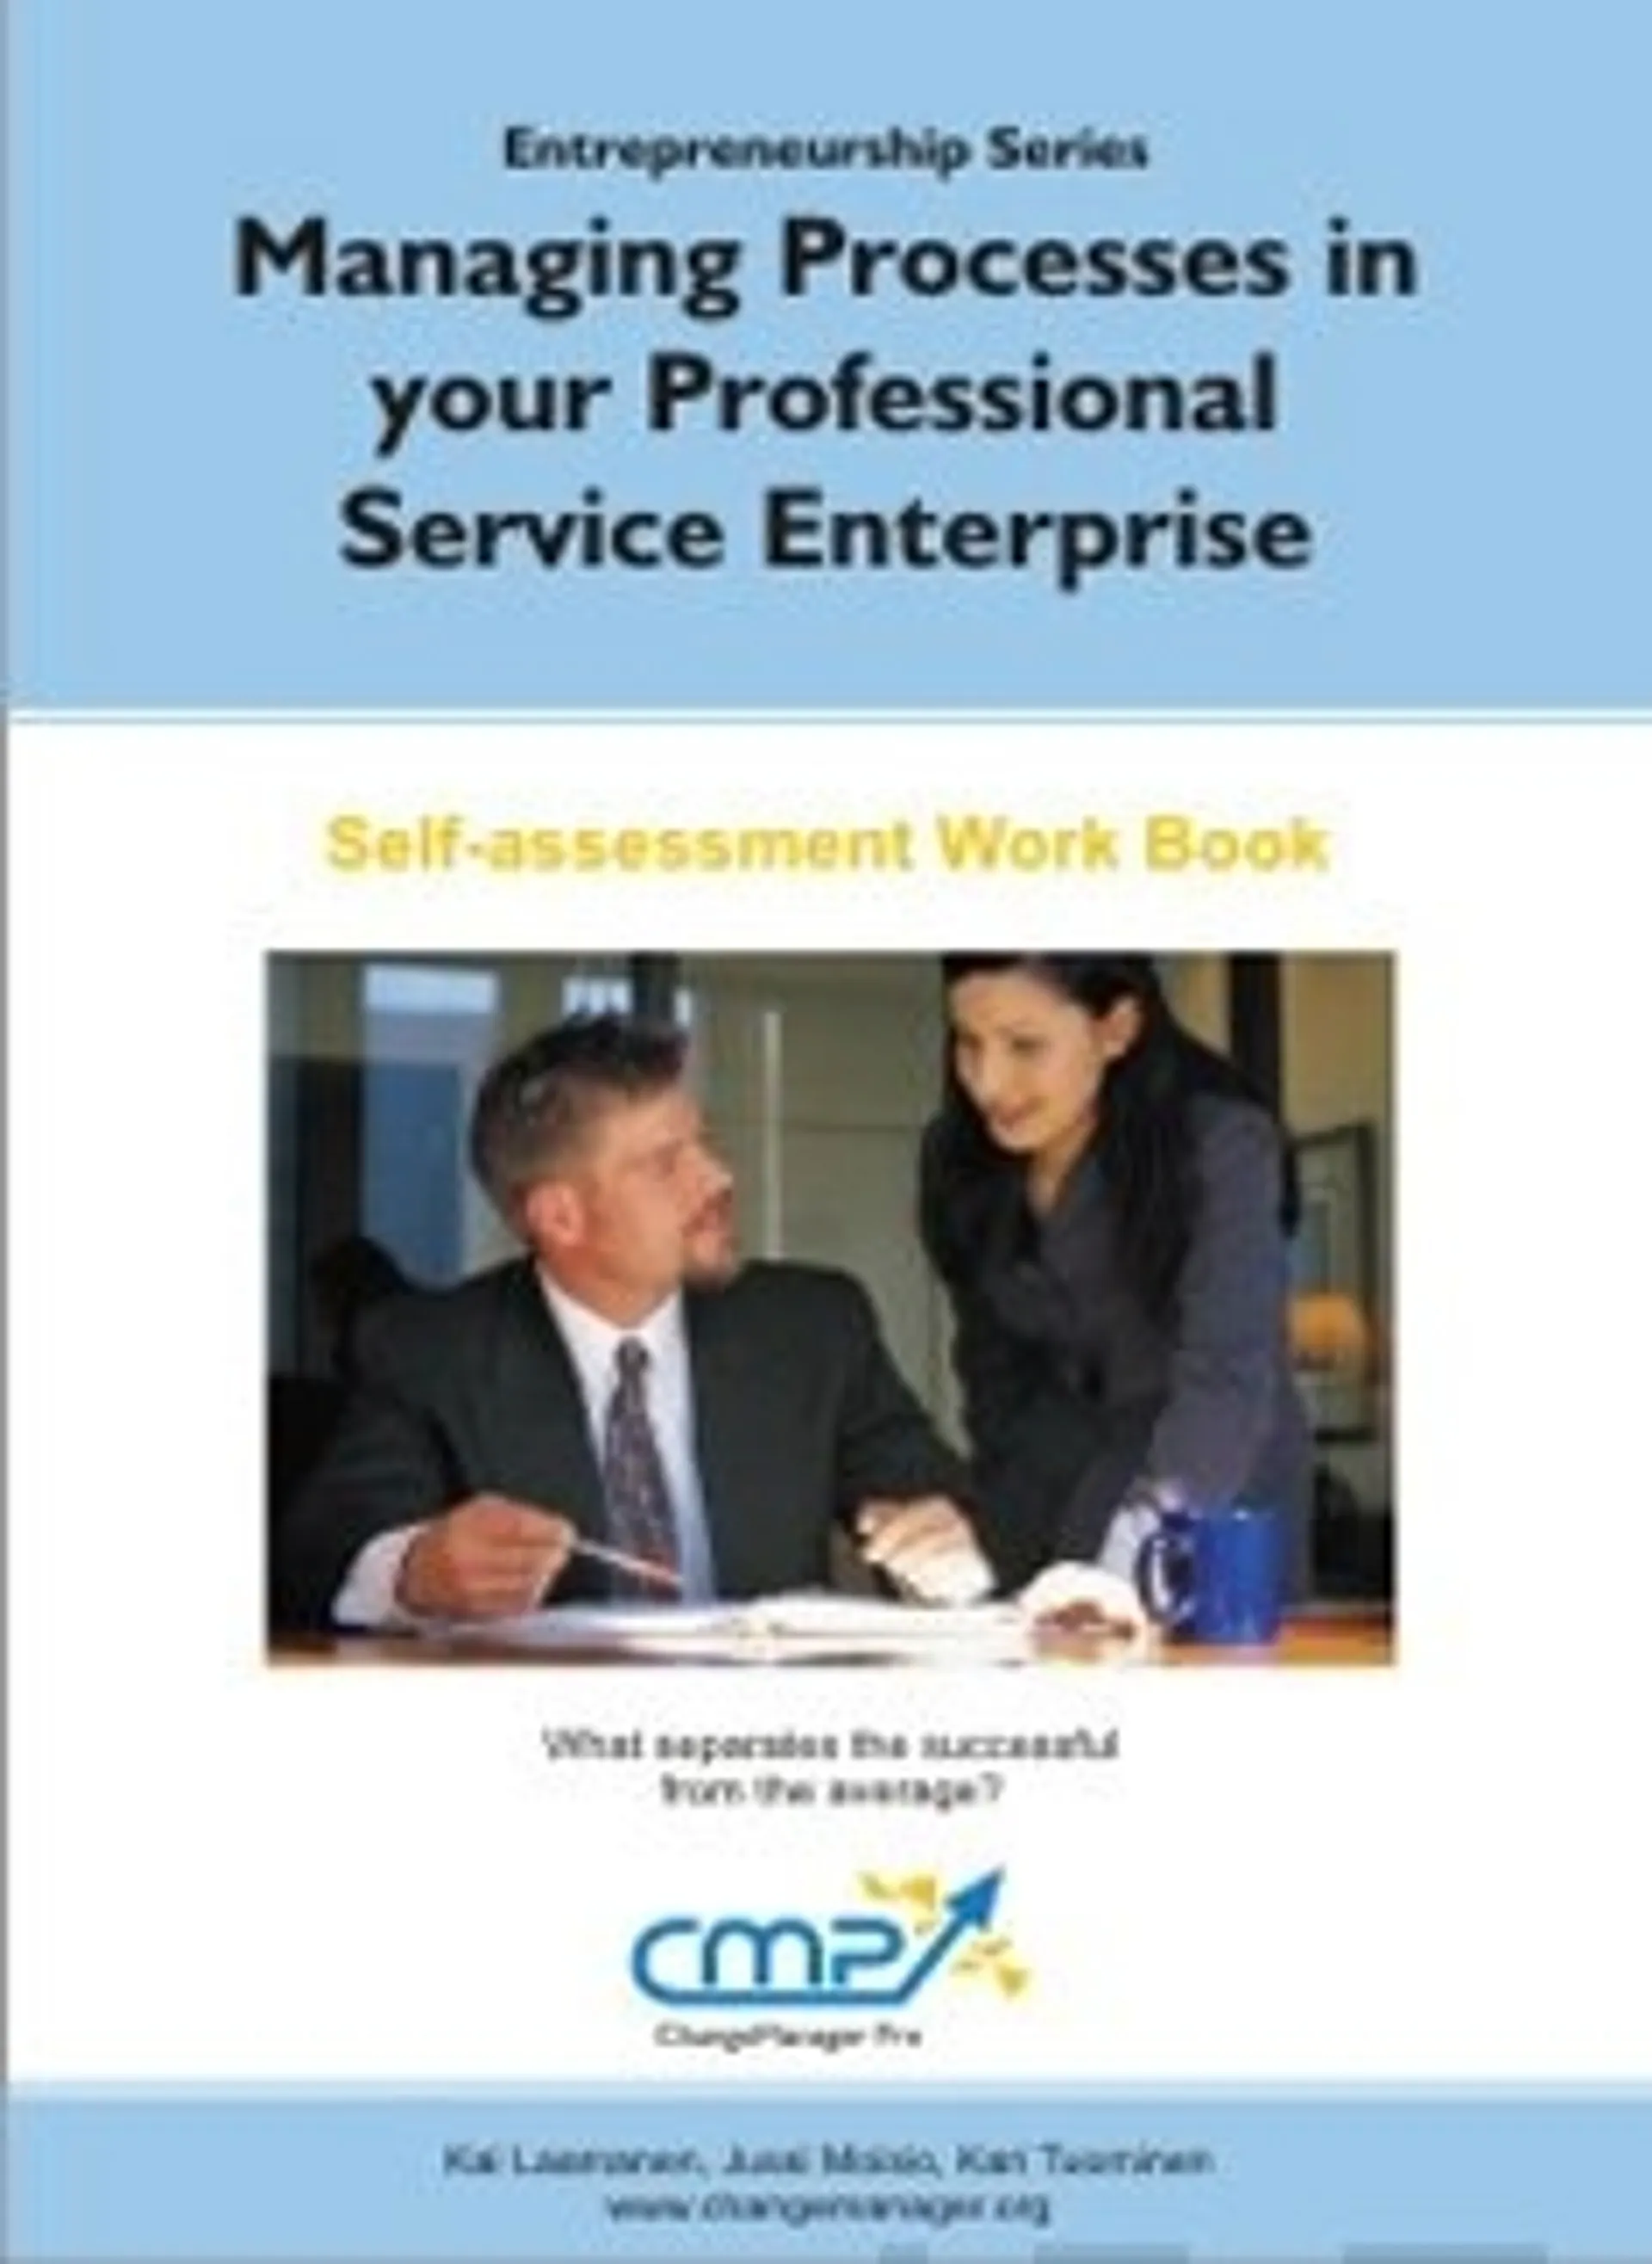 Managing Process in Your Professional Service Enterprise - EFQM 2010